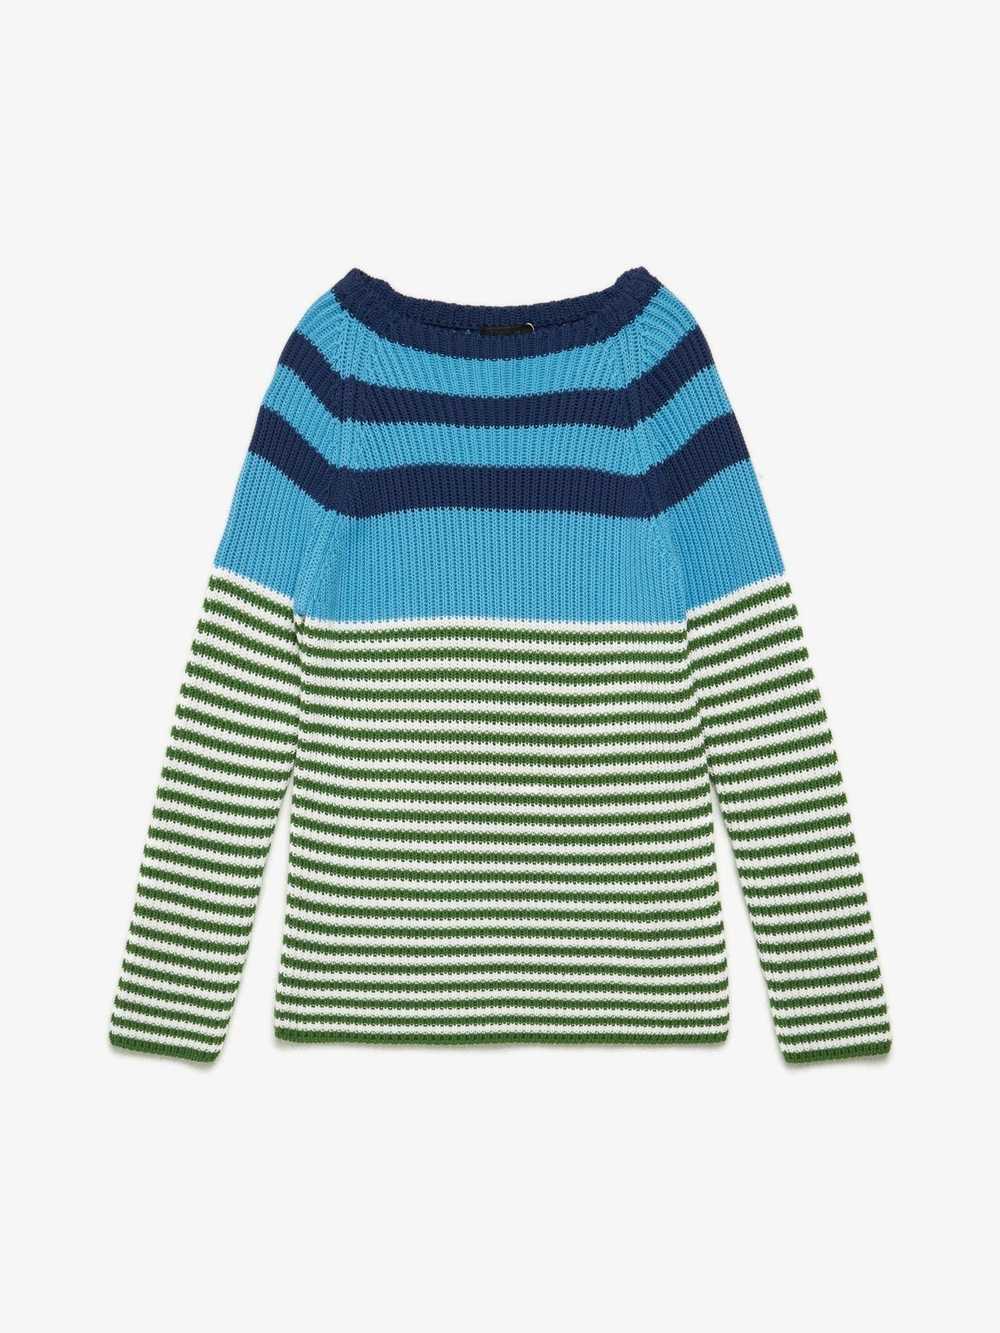 Prada Blue And Green Striped Cotton Sweater - image 1